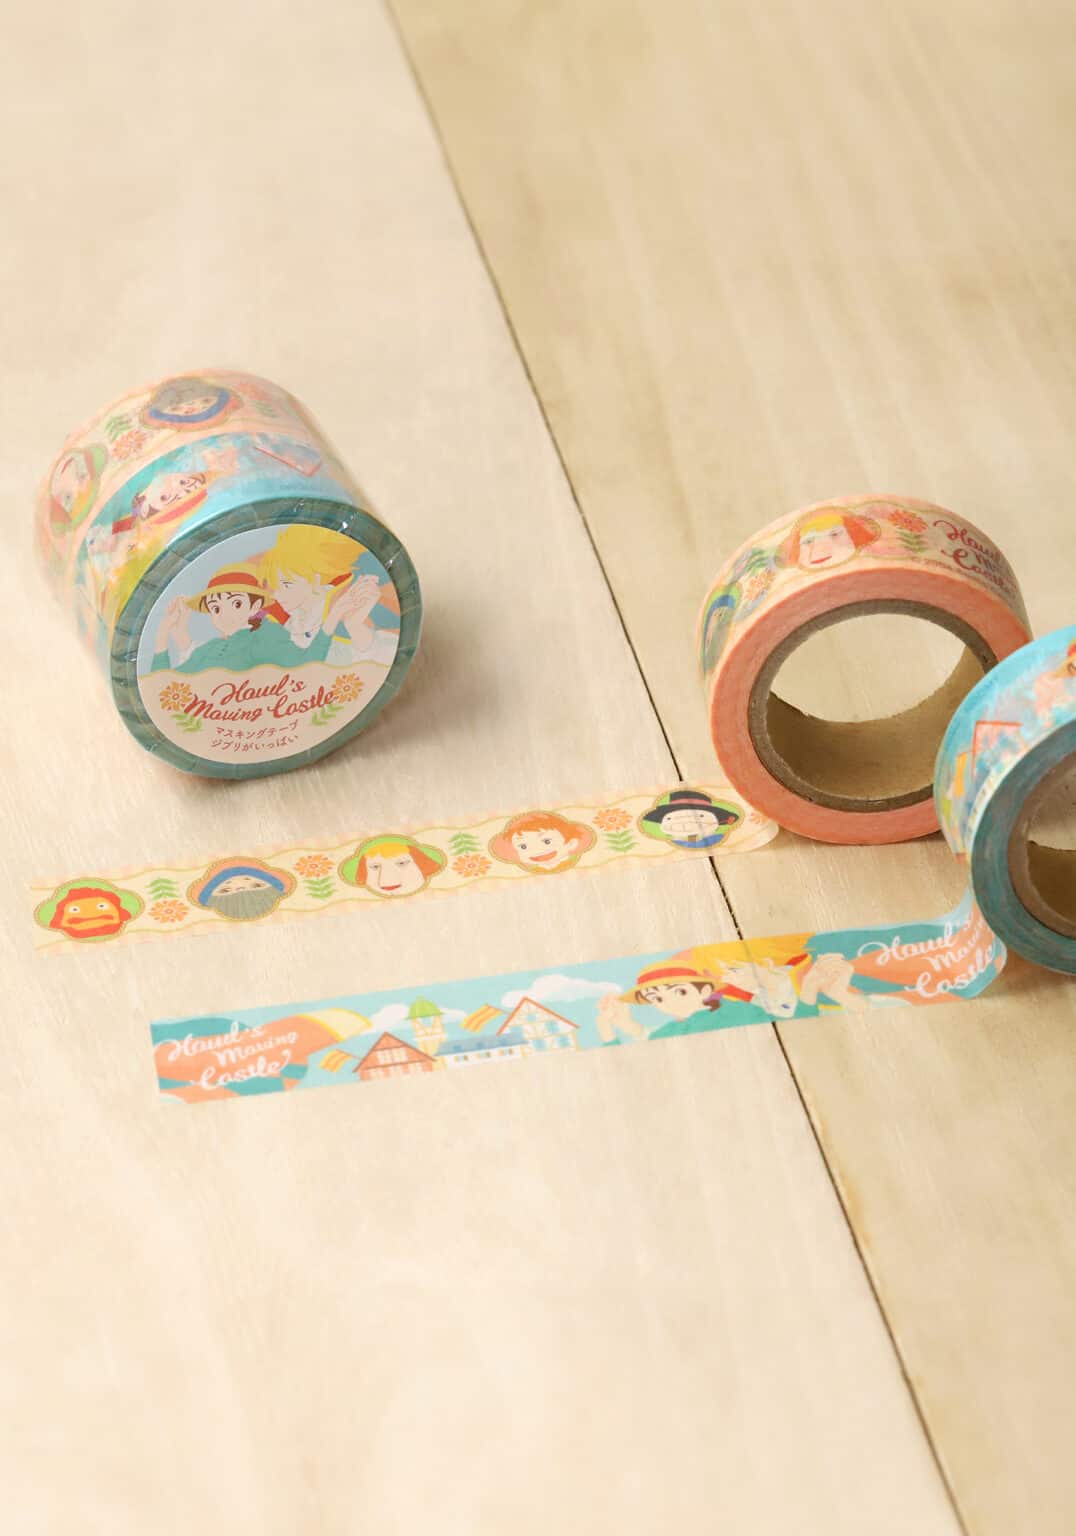  Japanese Washi Masking Tape -Mini Set of 3 kids tape